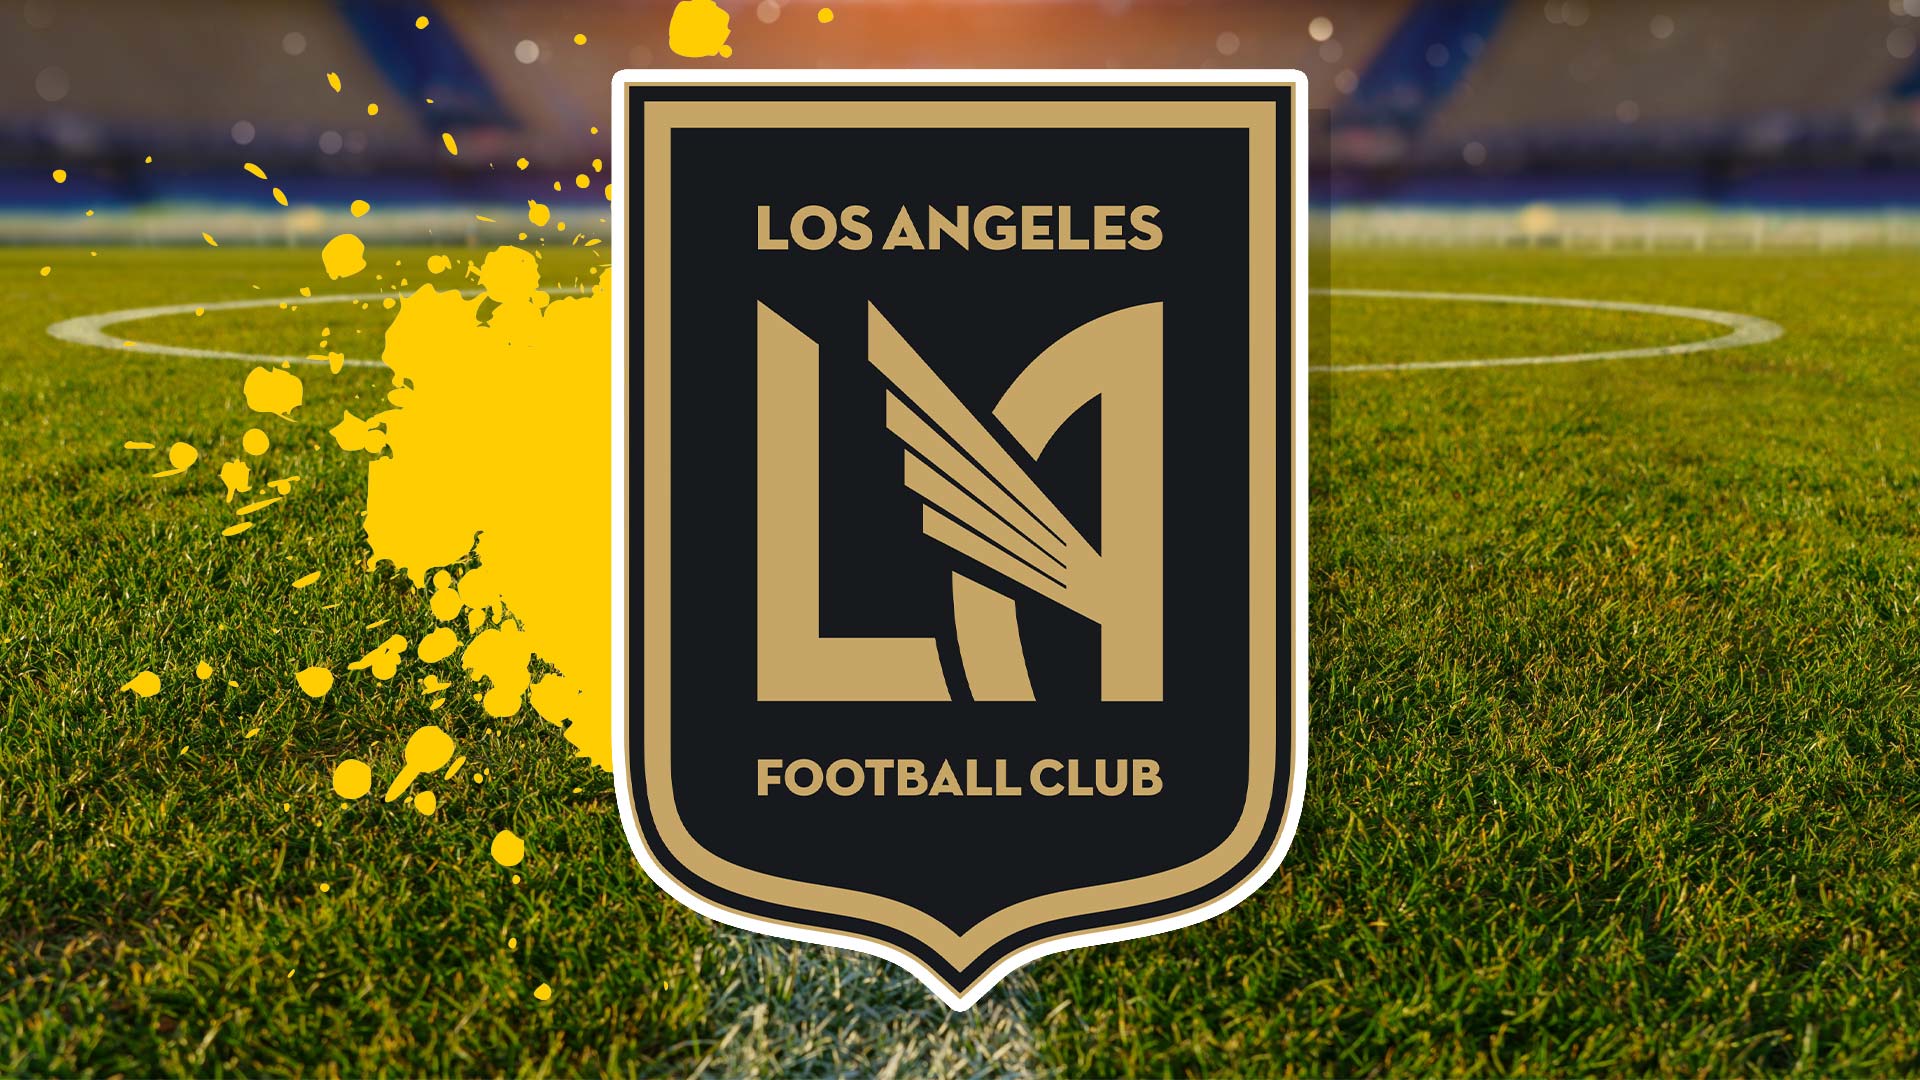 Los Angeles Football Club badge